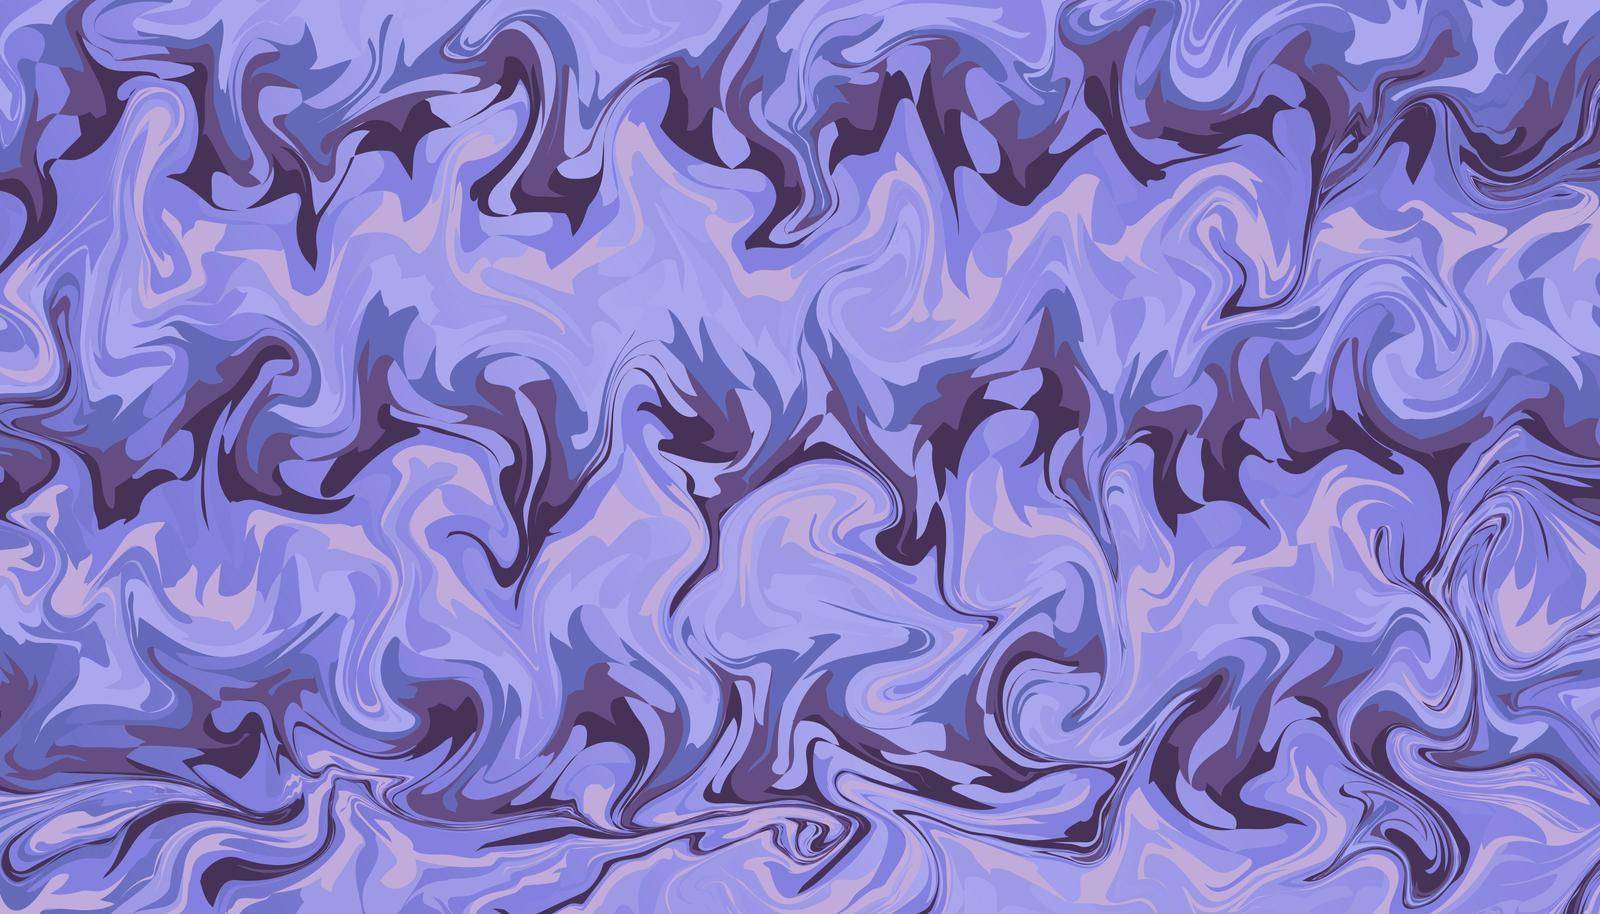 Liquid Very peri violet background by Golovkina